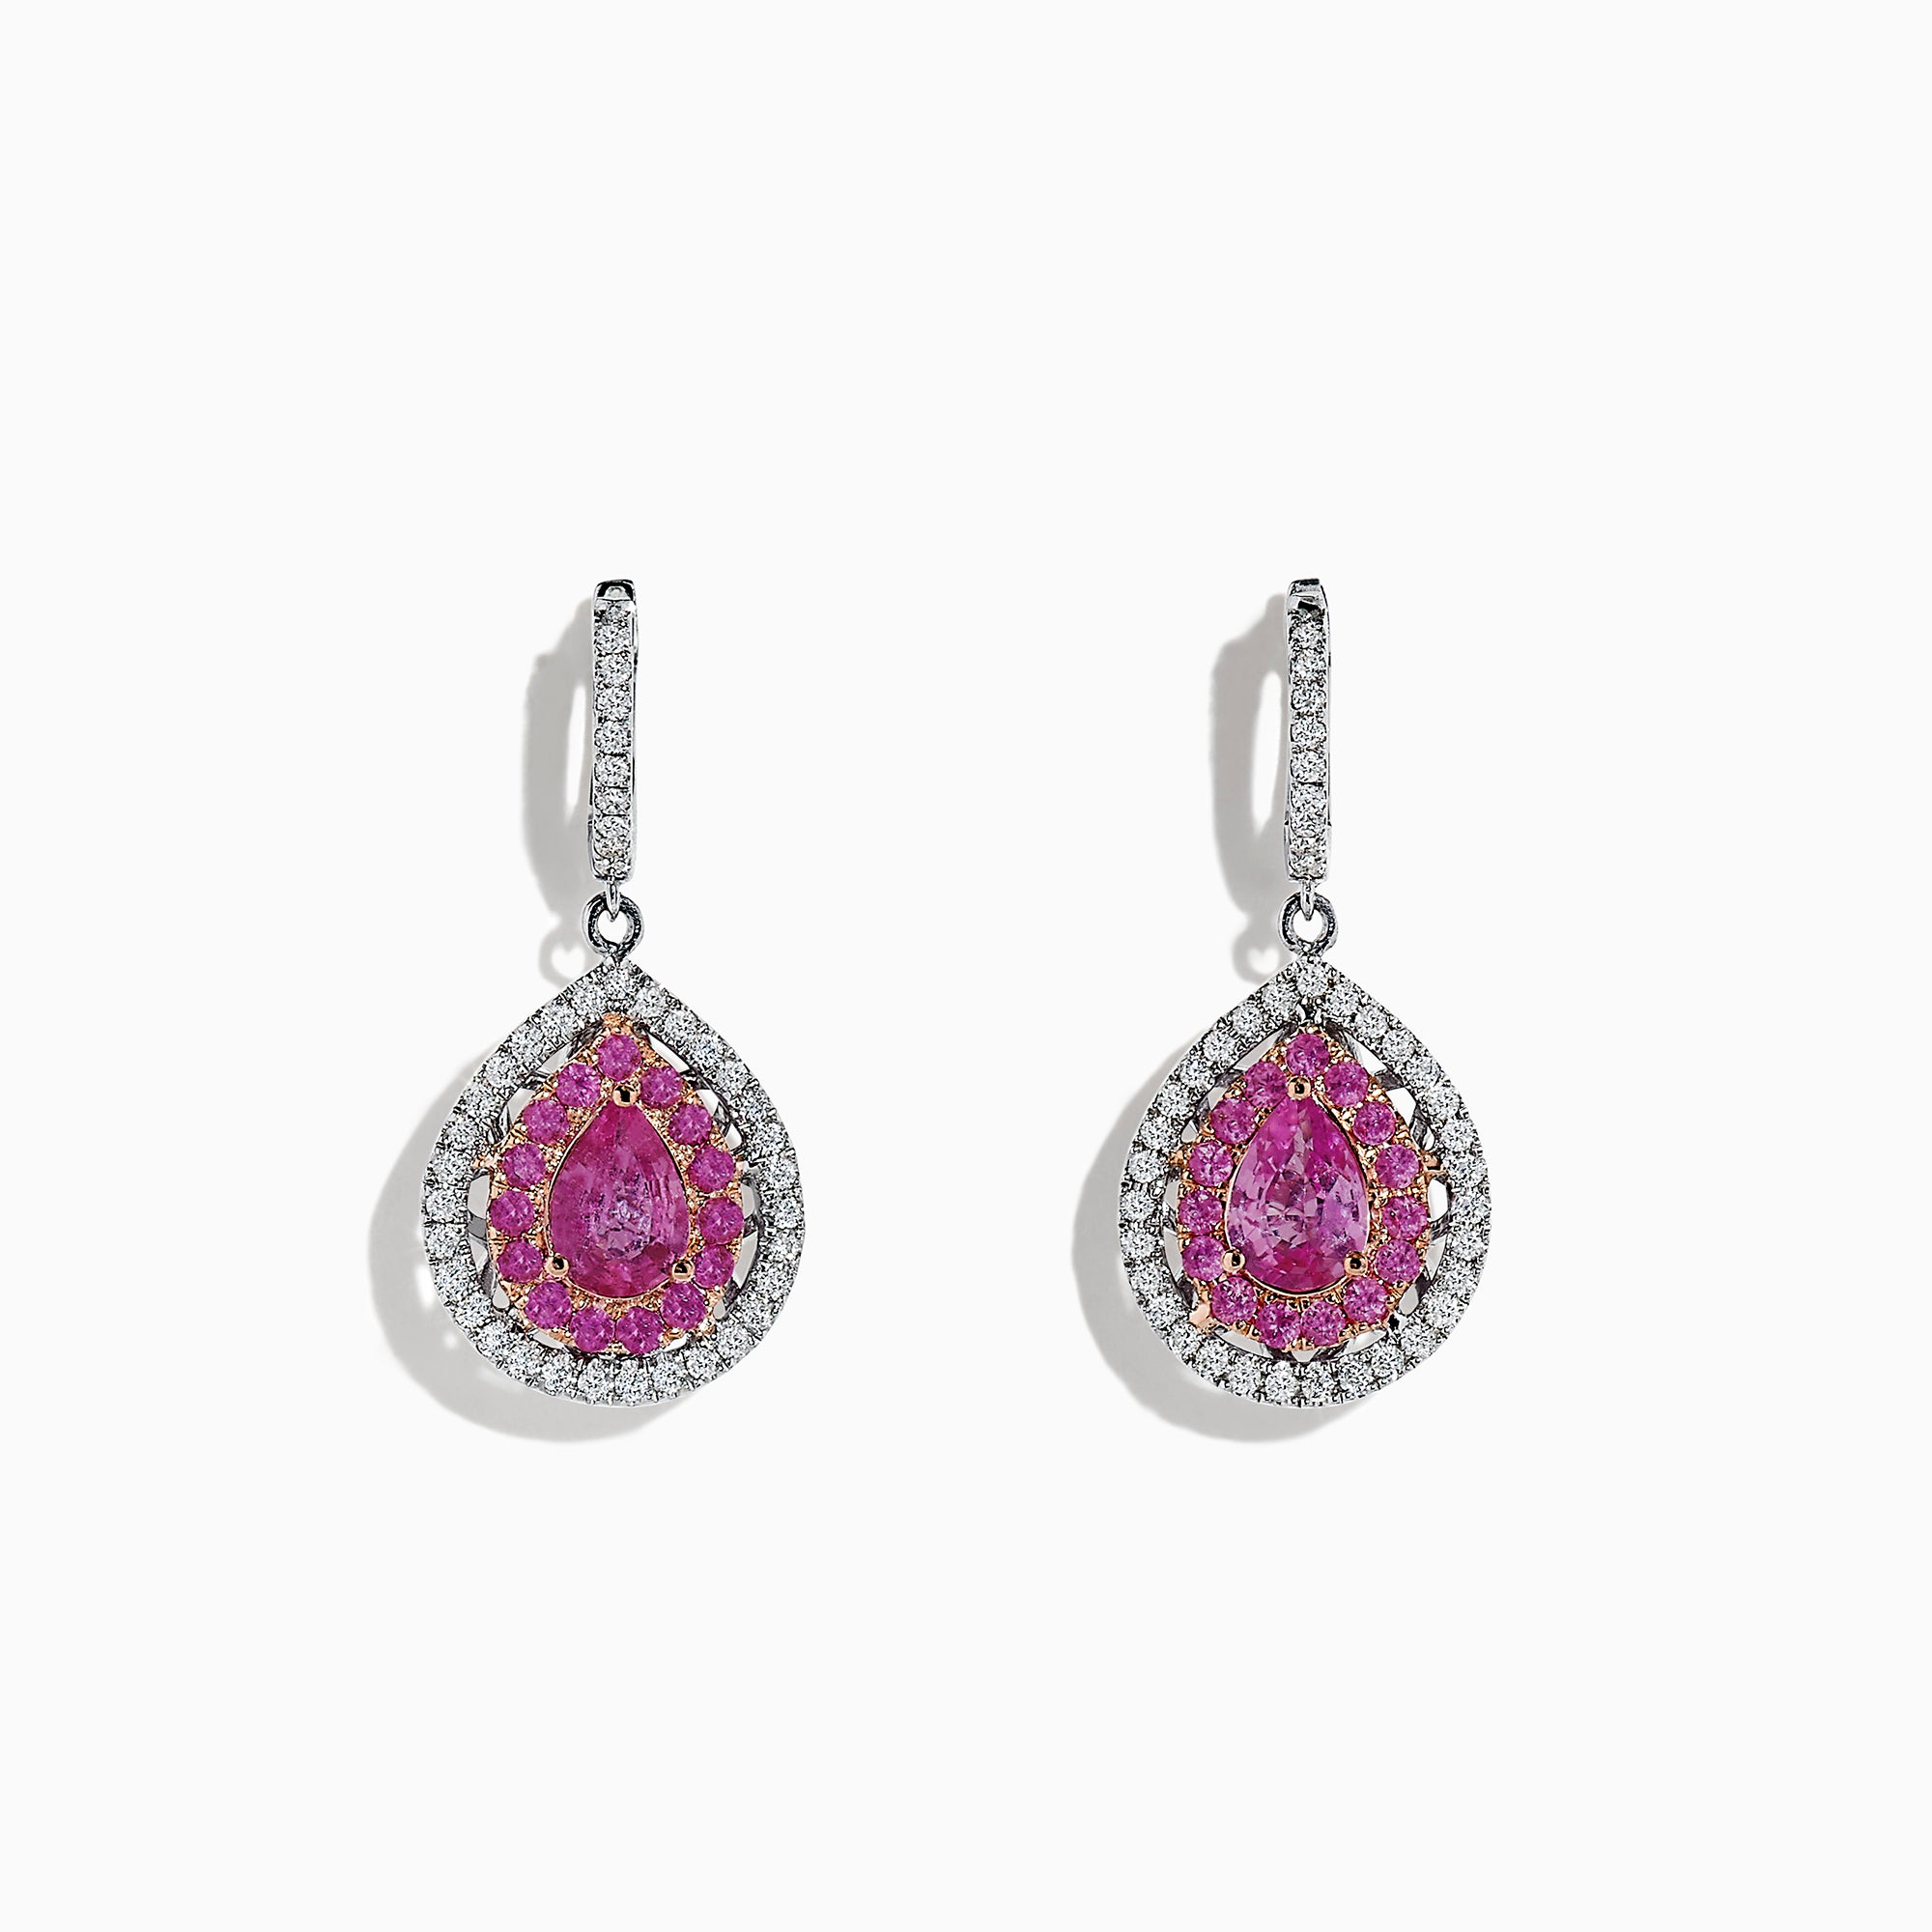 8 Carat Pear Shaped Pink Diamond Earrings Halo Dangling